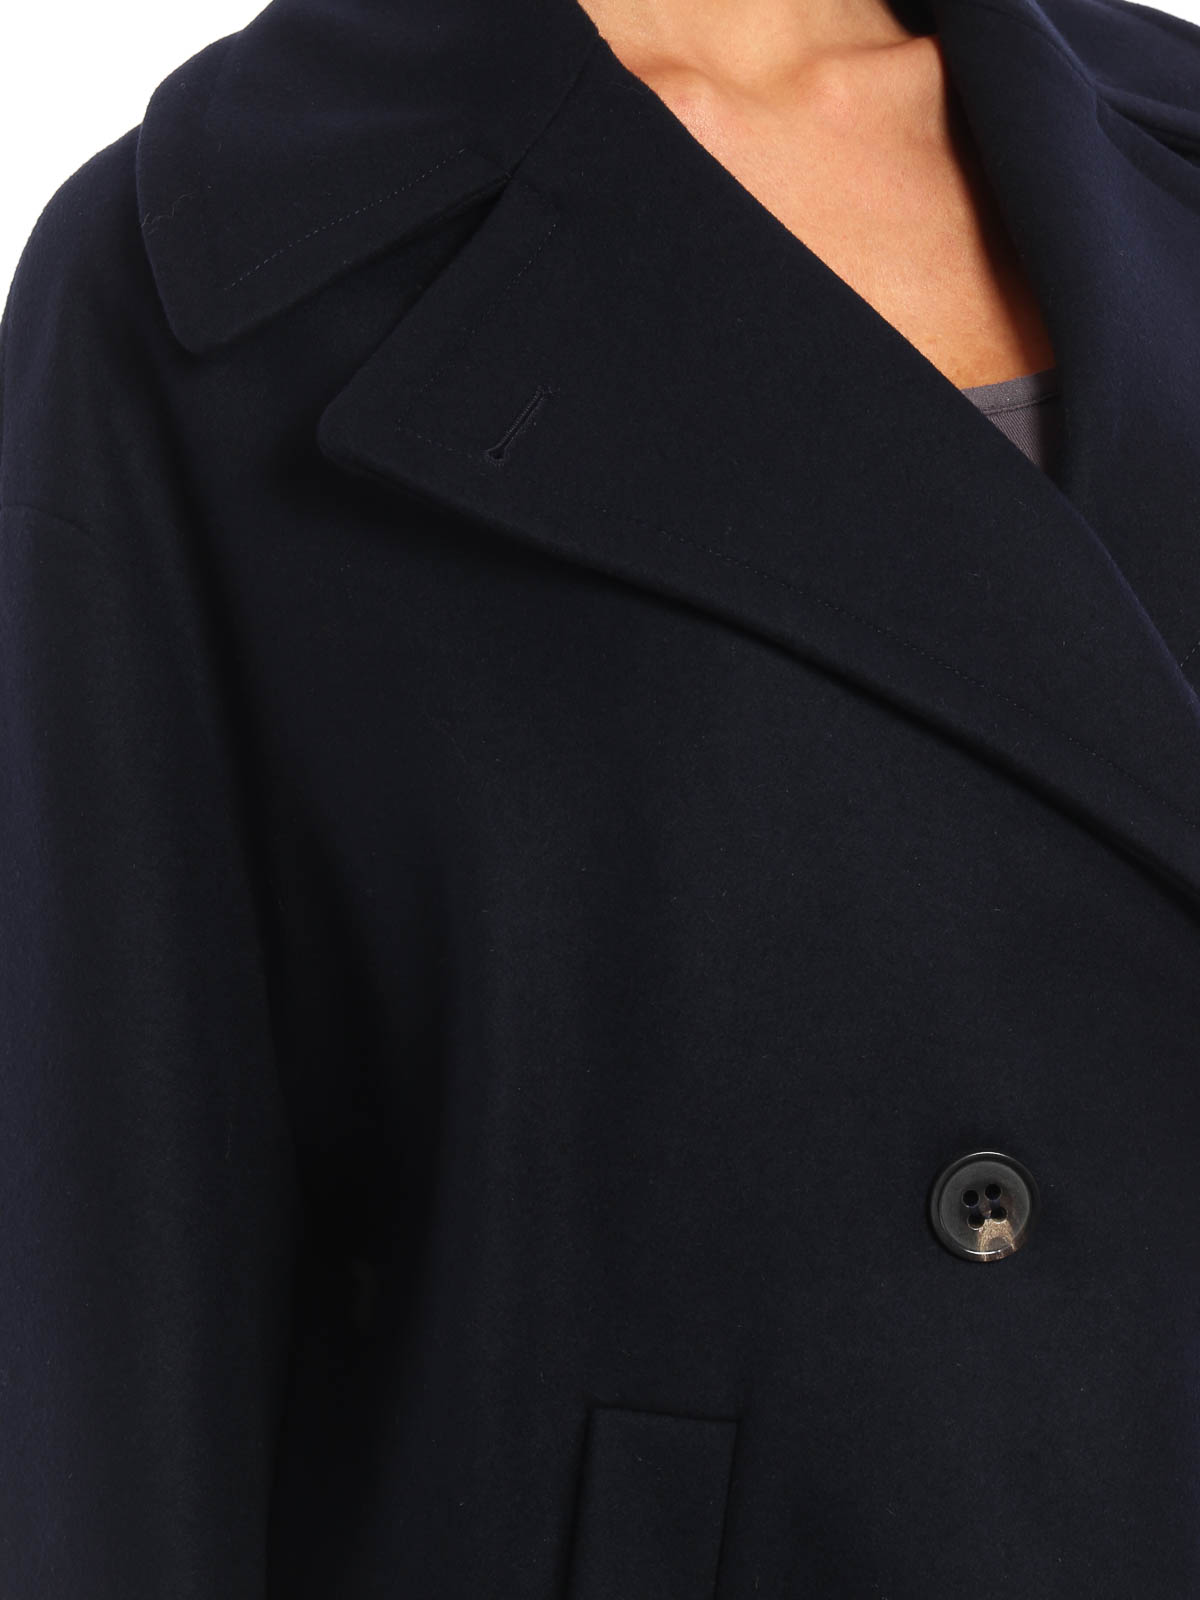 Short coats Erika Cavallini - Ryana wool blend peacoat - E6I503007